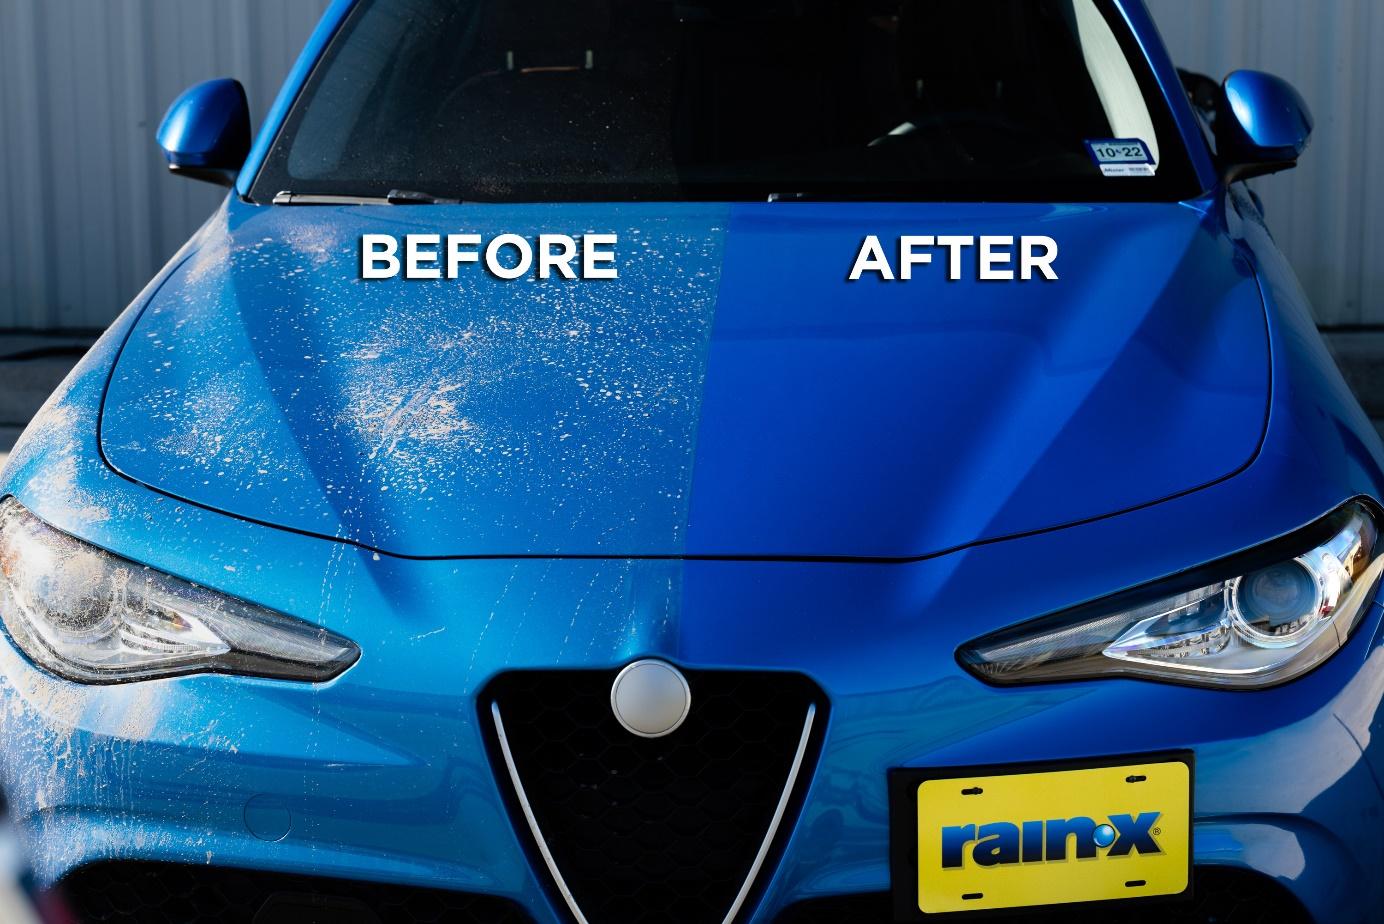 Rain-X® Waterless Car Wash & Rain Repellent - Rain-X